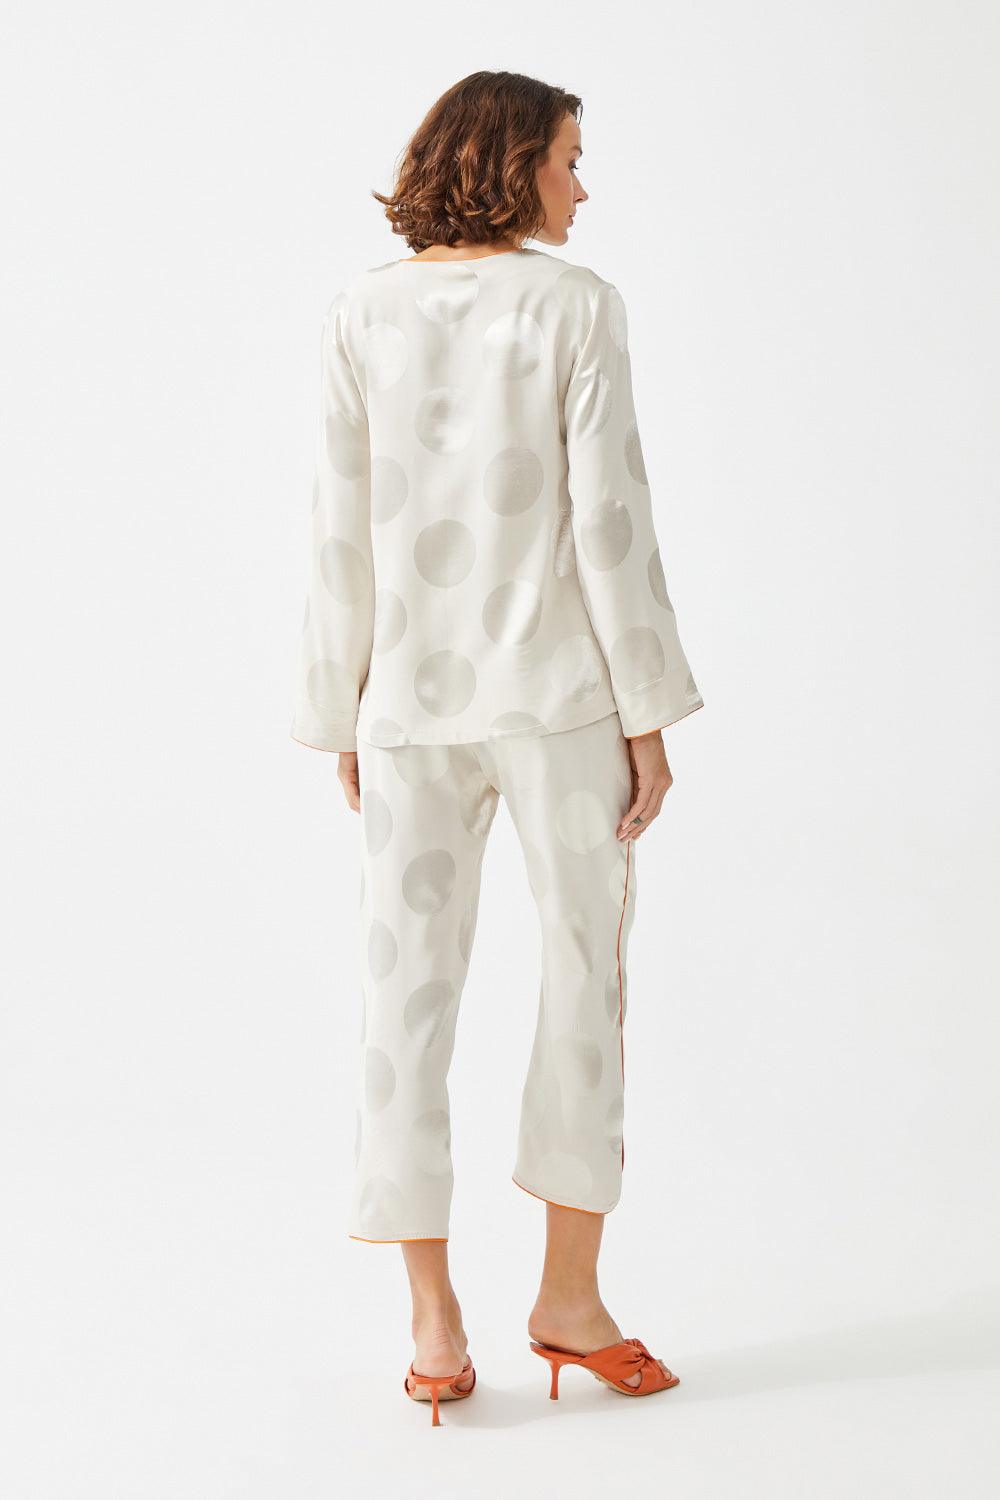 Momo Long Sleeve Buttoned and Patterned Pyjama Set - Beige - Bocan